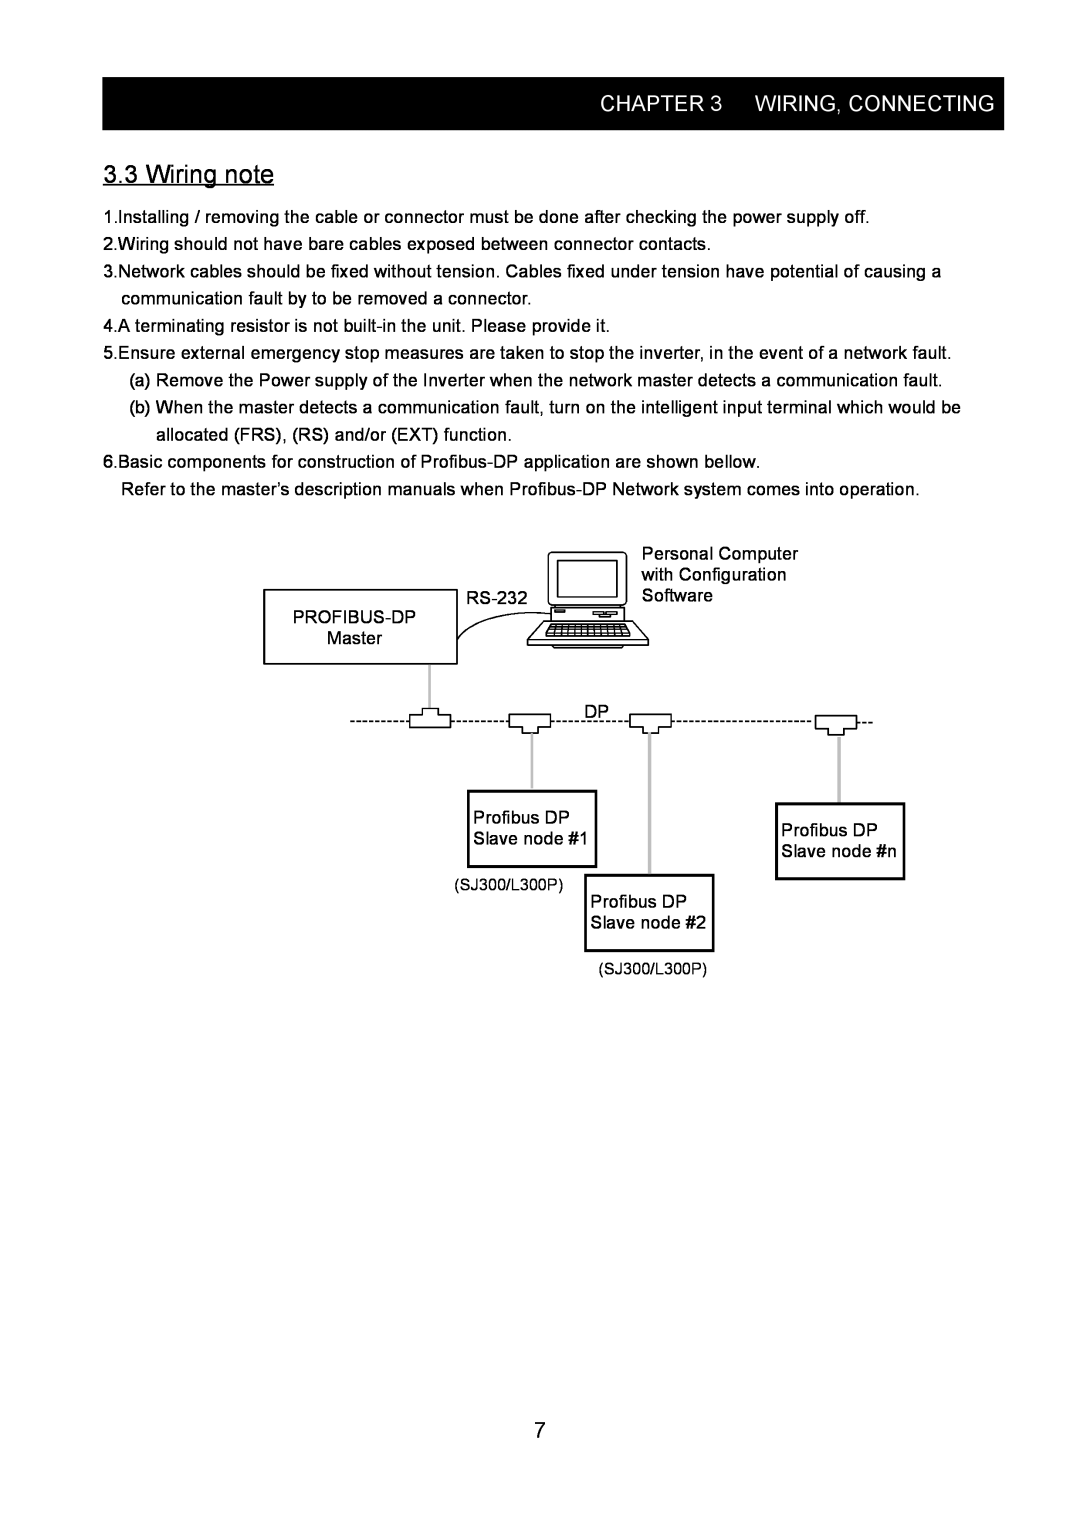 Hitachi SJ-PB(T) instruction manual Wiring note, Wiring, Connecting 